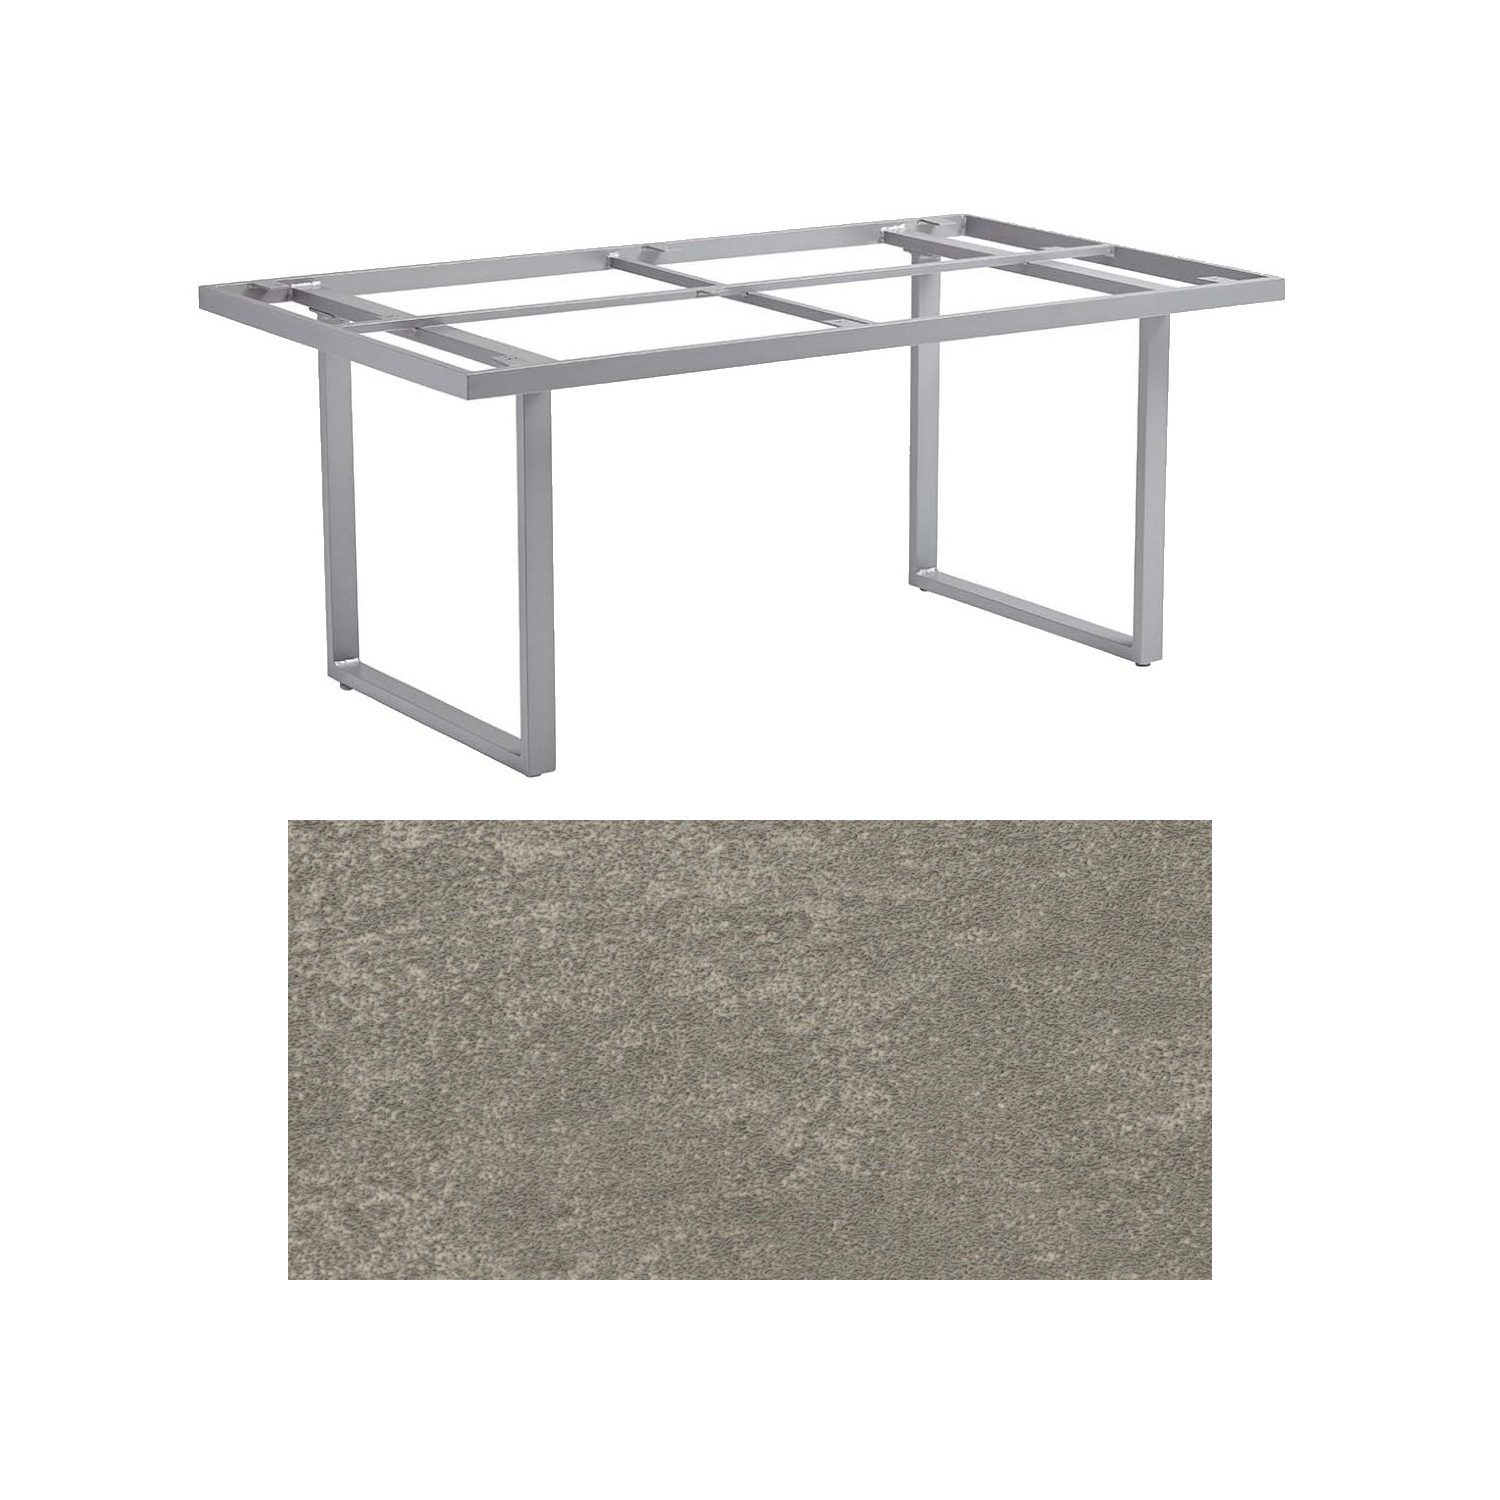 Kettler "Skate" Gartentisch Casual Dining, Gestell Aluminium silber, Tischplatte Keramik grau-taupe, 160x95 cm, Höhe ca. 68 cm